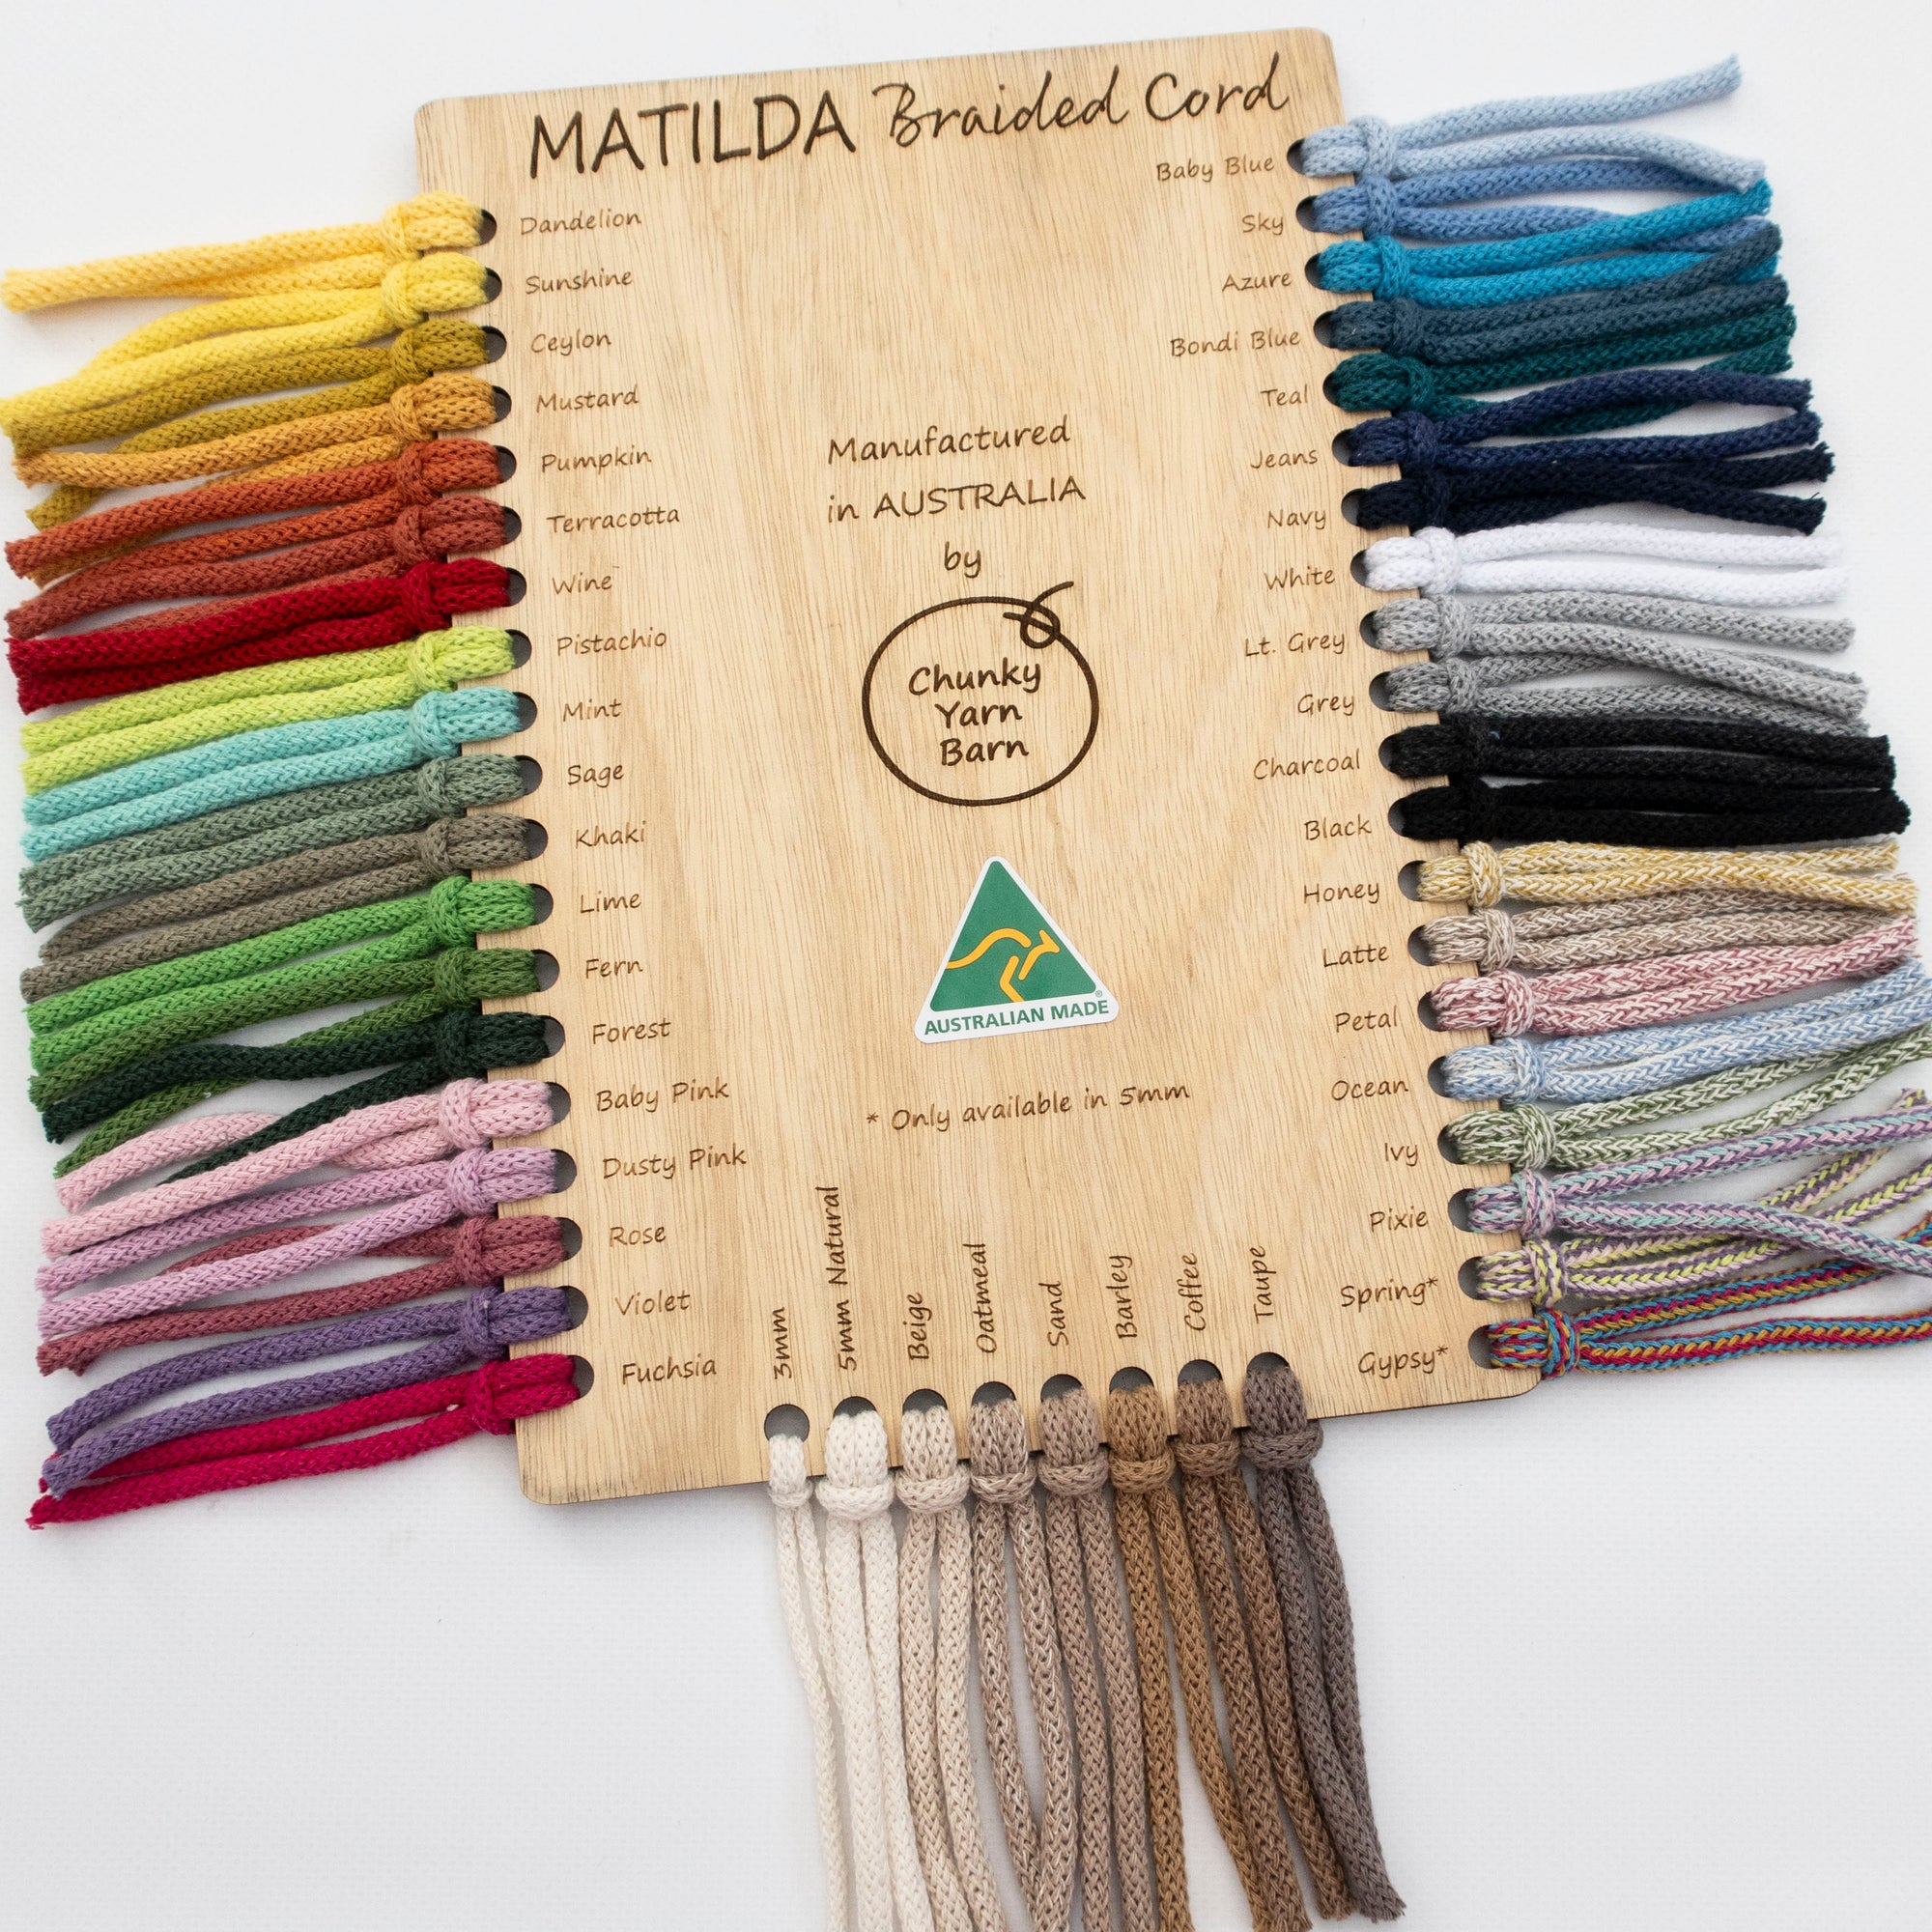 MATILDA Braided Cord 5mm 200m